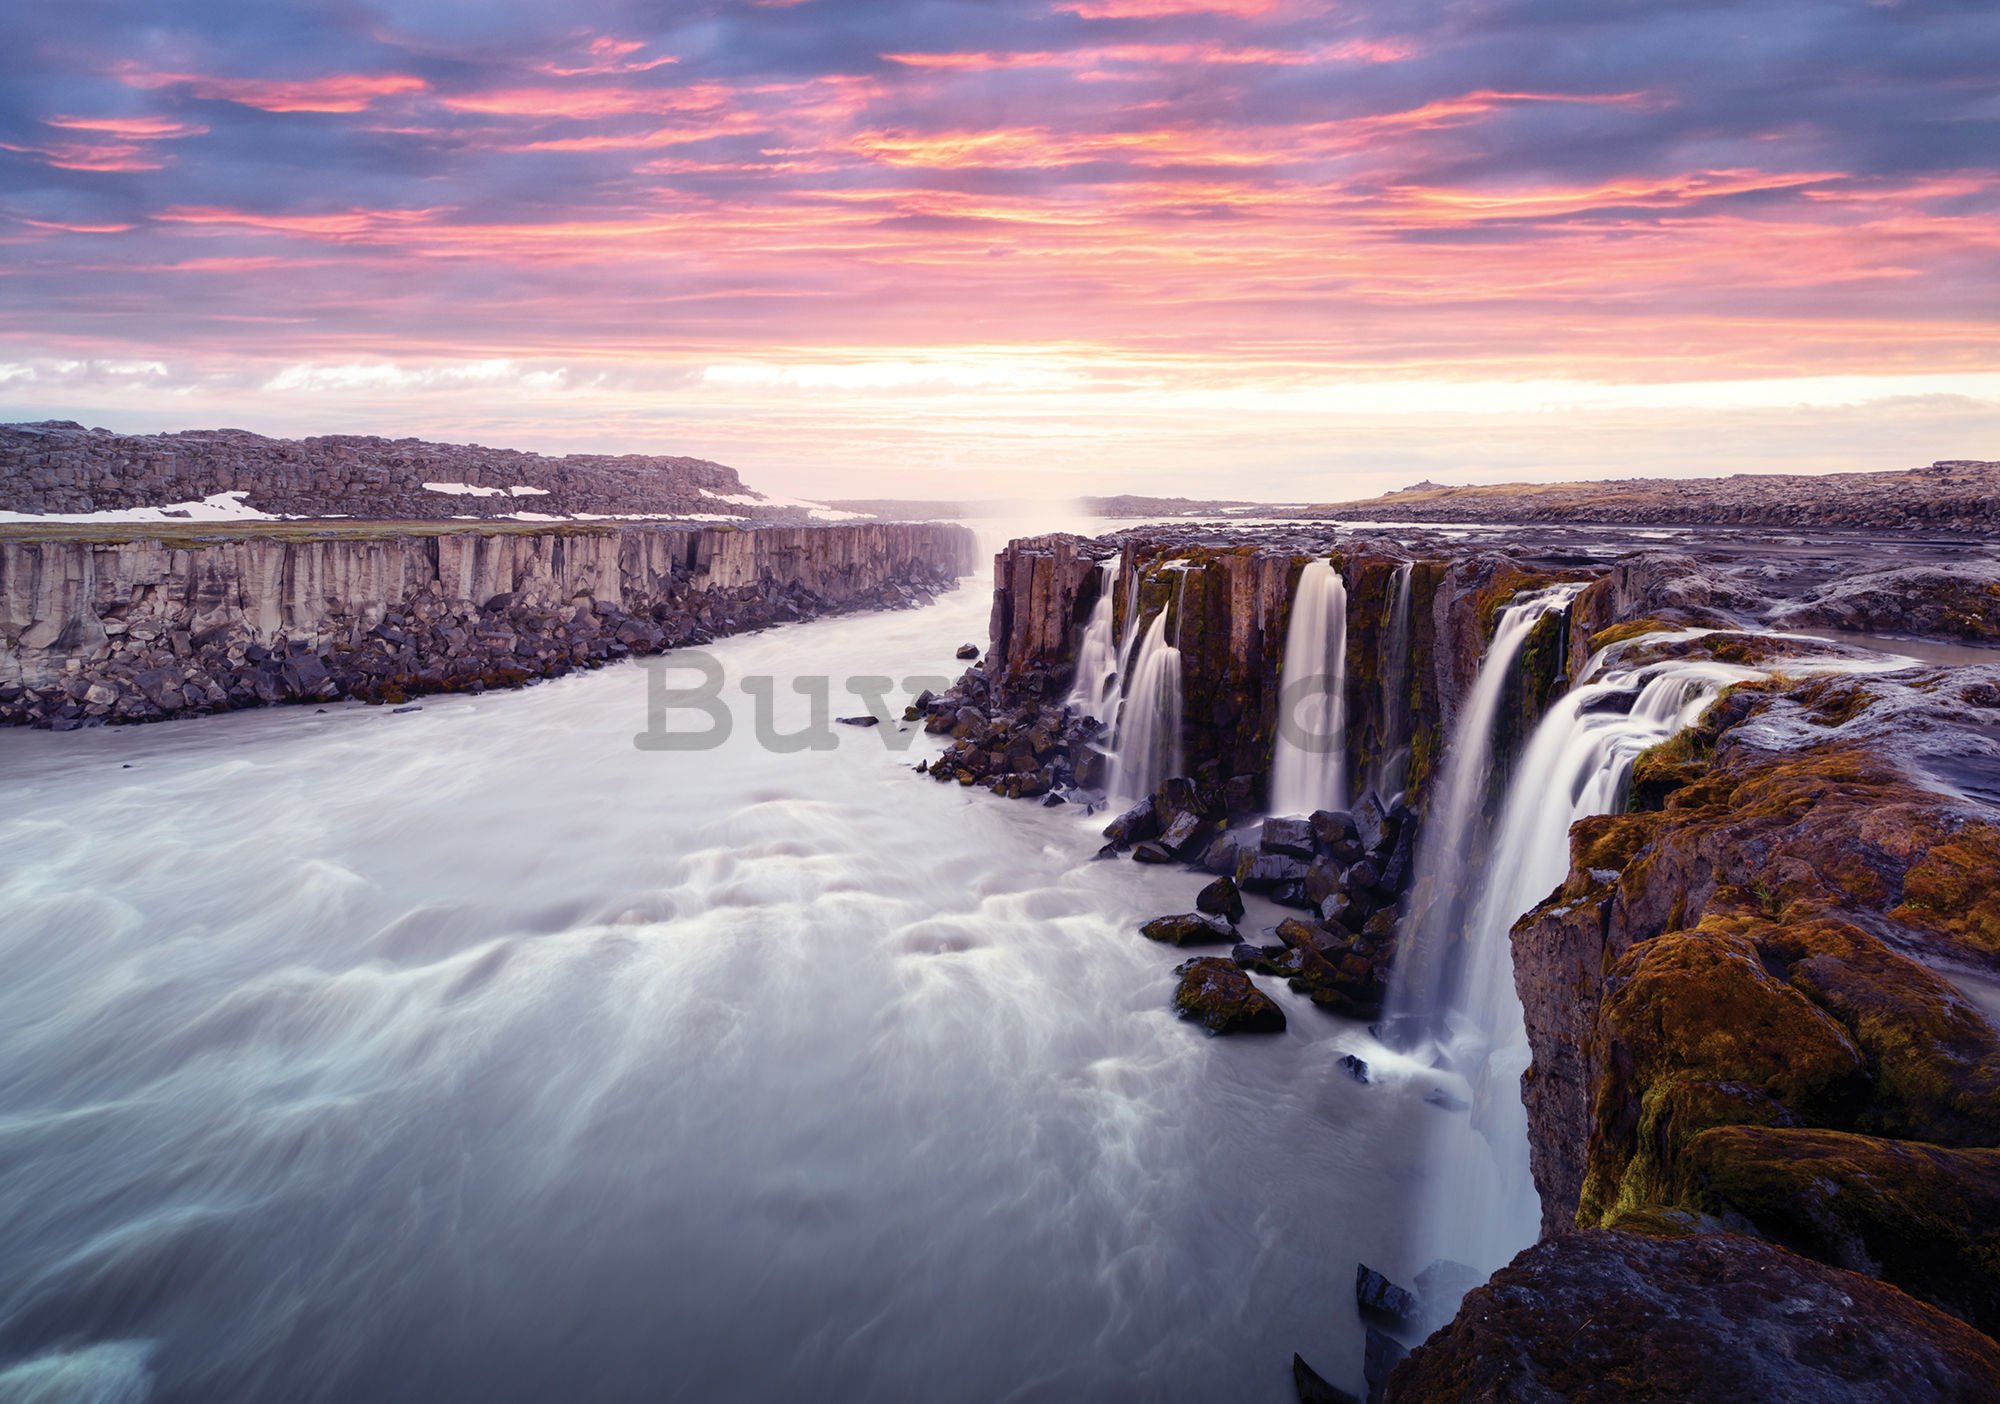 Fototapet vlies: Selfoss, Islanda - 254x368 cm